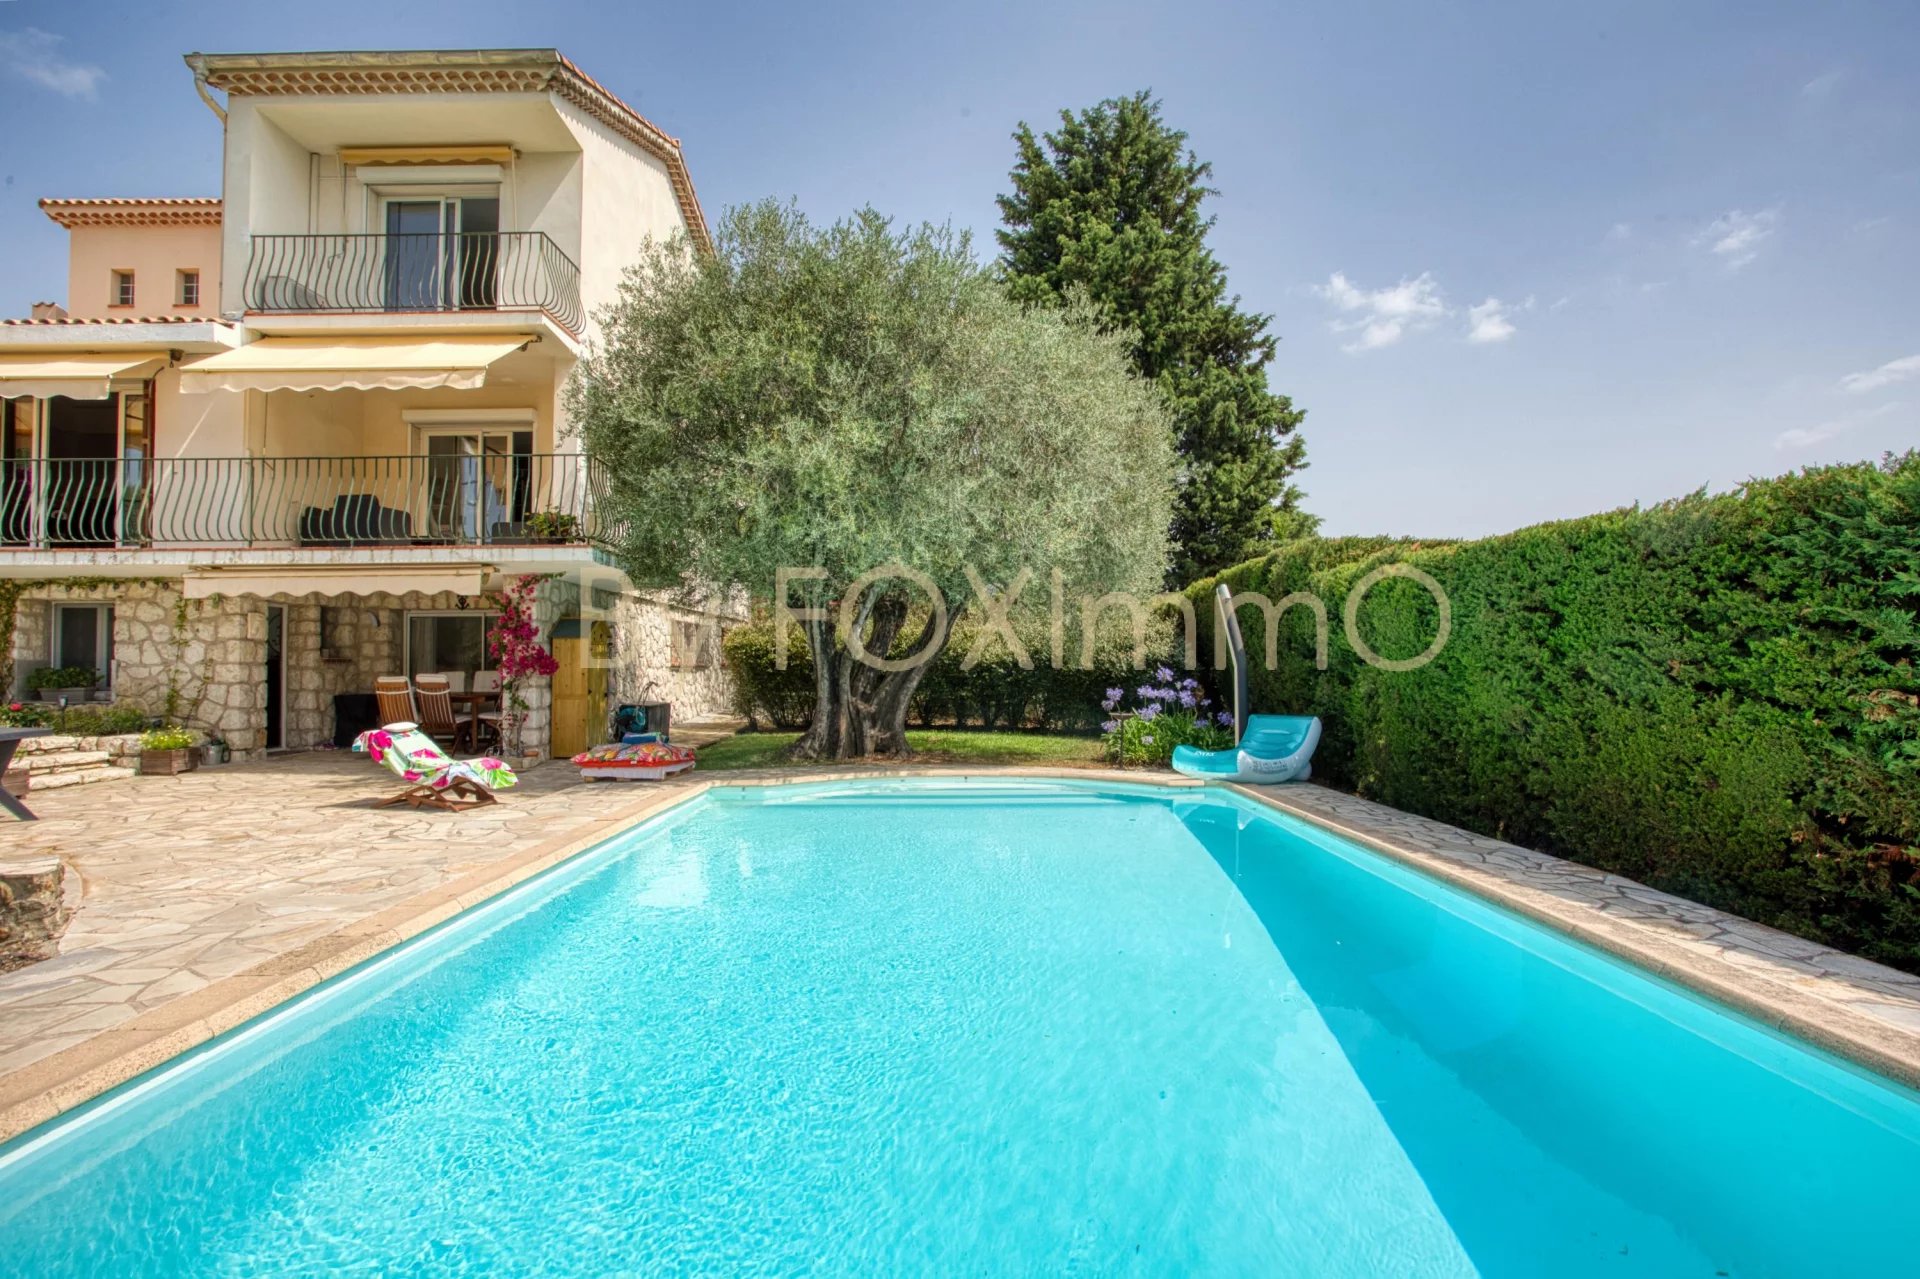 Côte d'Azur detached villa, quiet area, swimming pool, Separate apartment